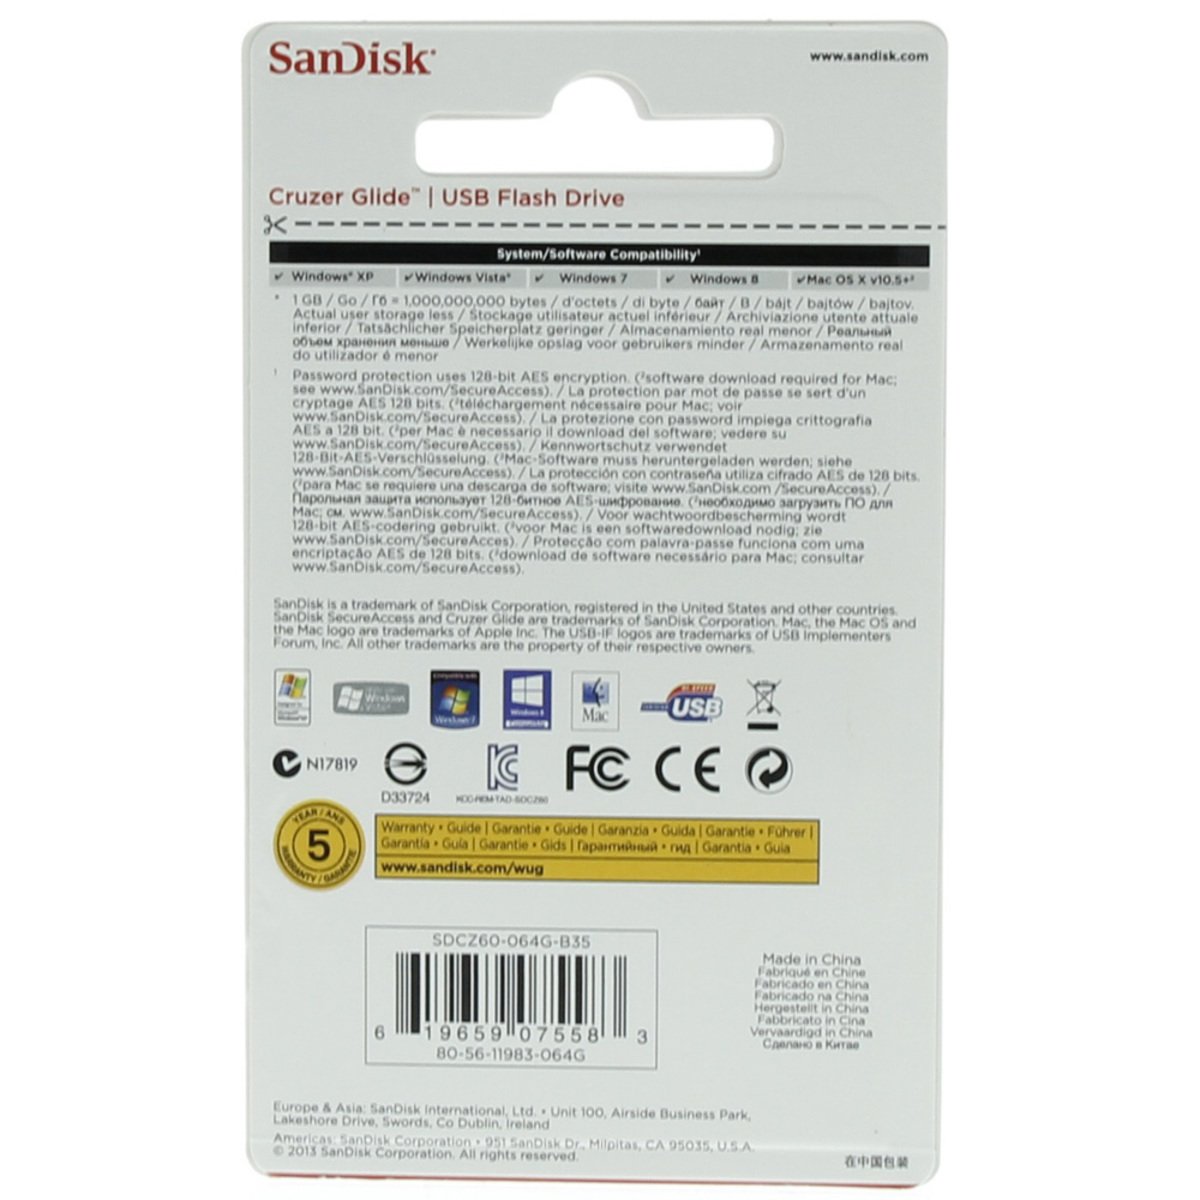 Sandisk FlashDrive CruzerSDCZ60-B35 64GB